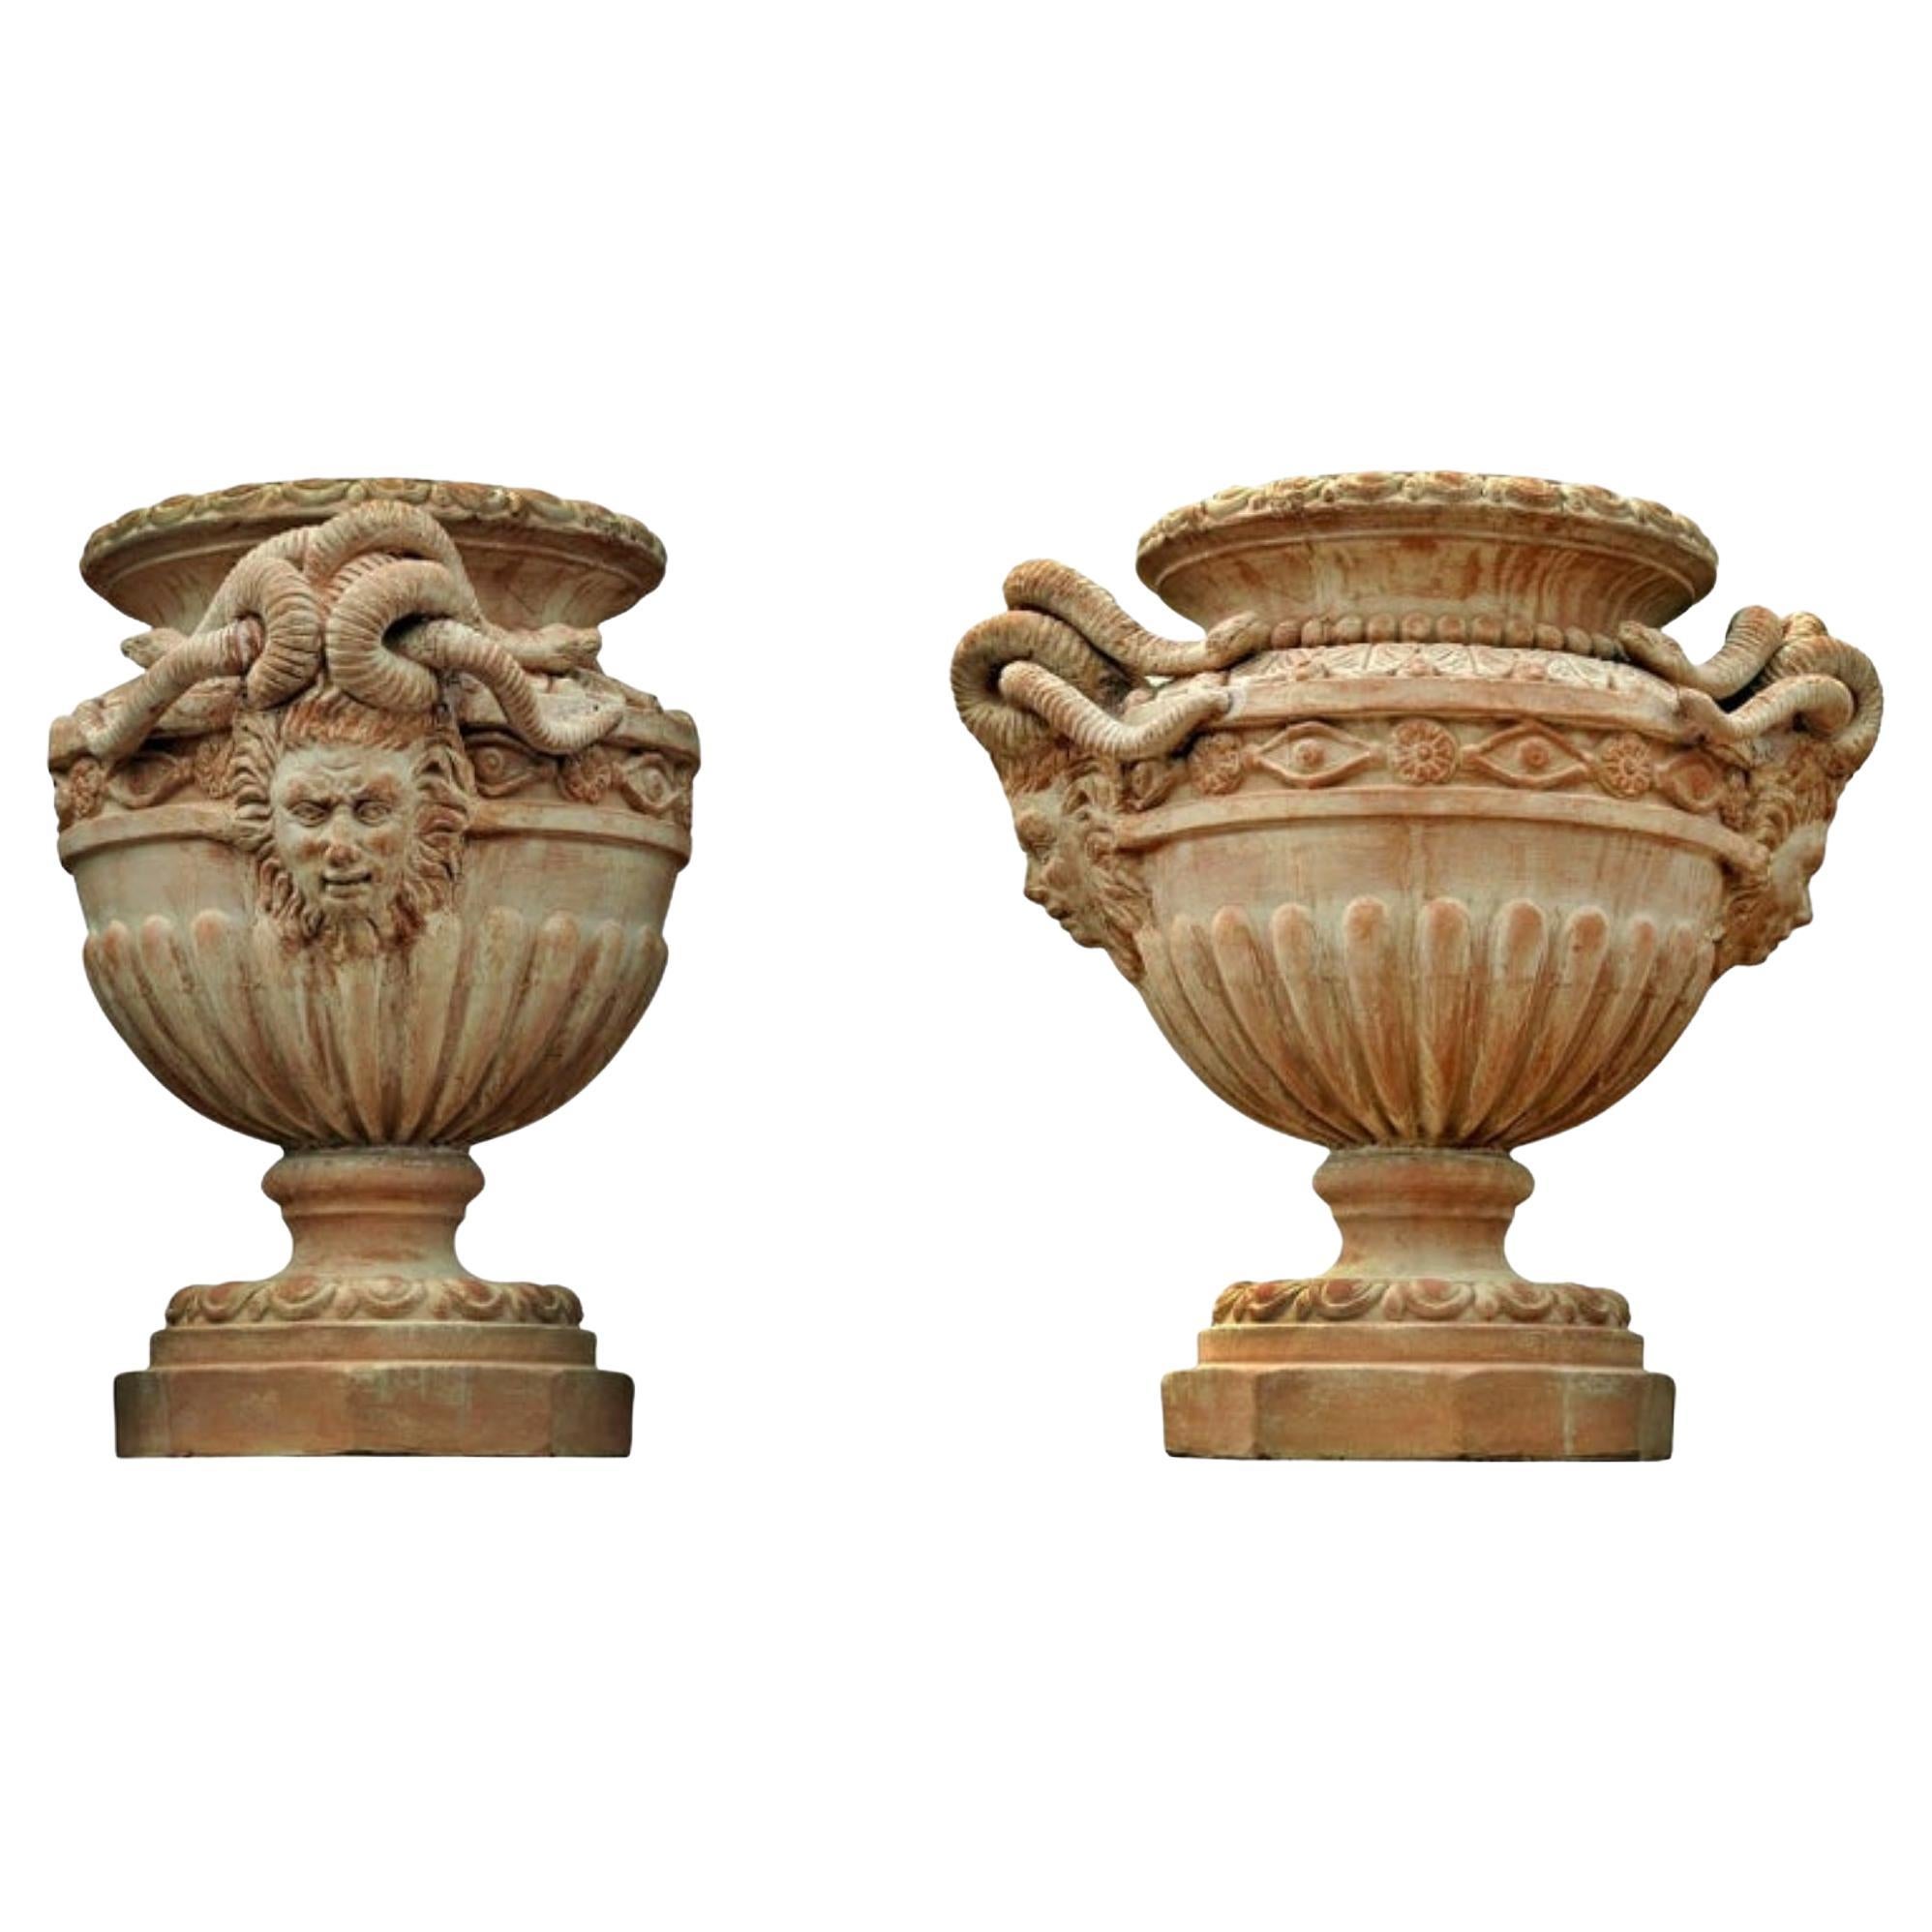 Large Mediceo Florentine Renaissance Vase with Medusas Early 20th Century